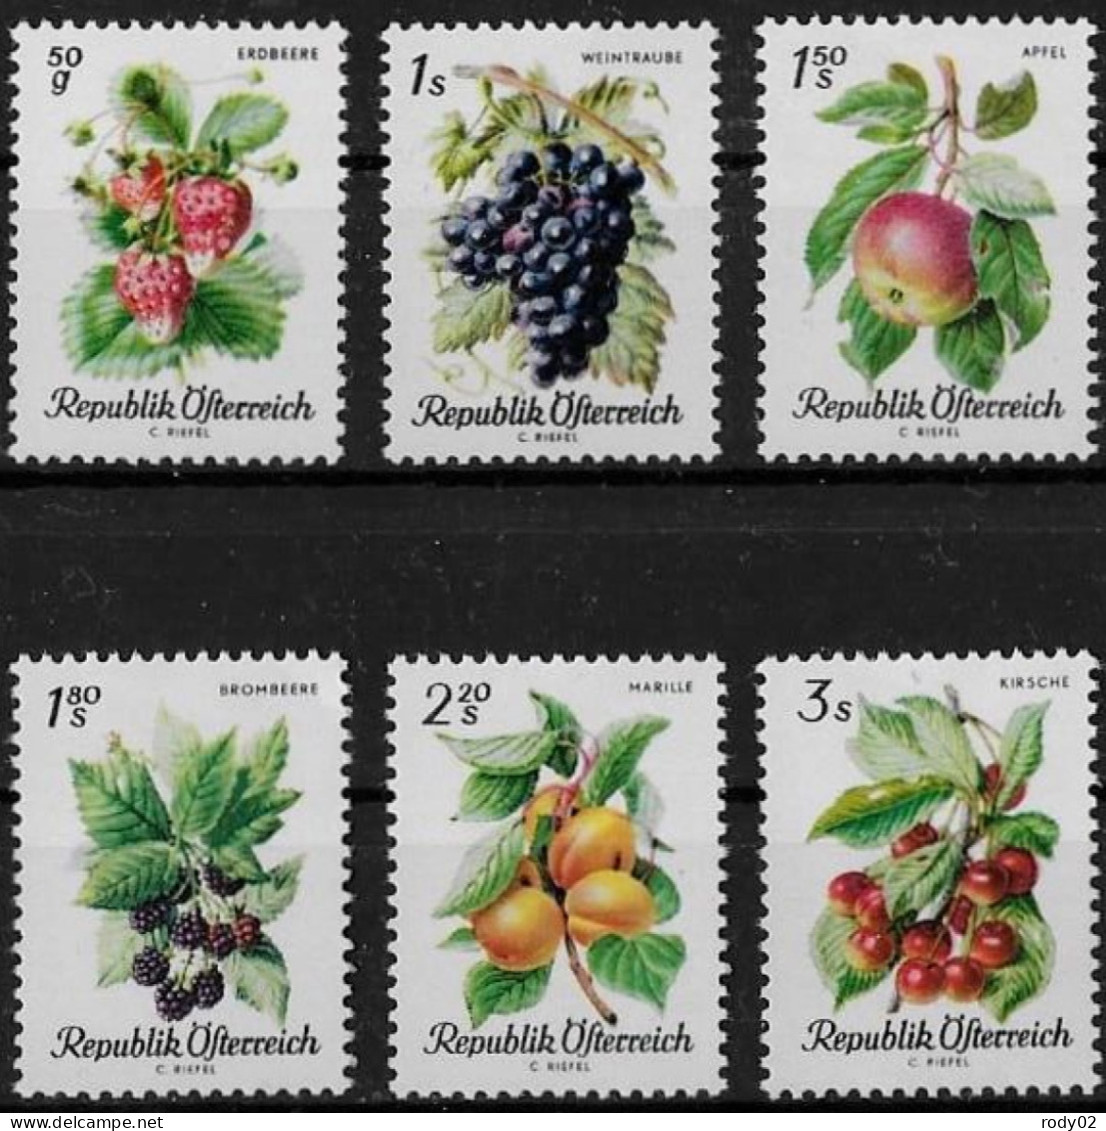 AUTRICHE - FRUITS - N° 1058 A 1063 - NEUF** MNH - Fruits